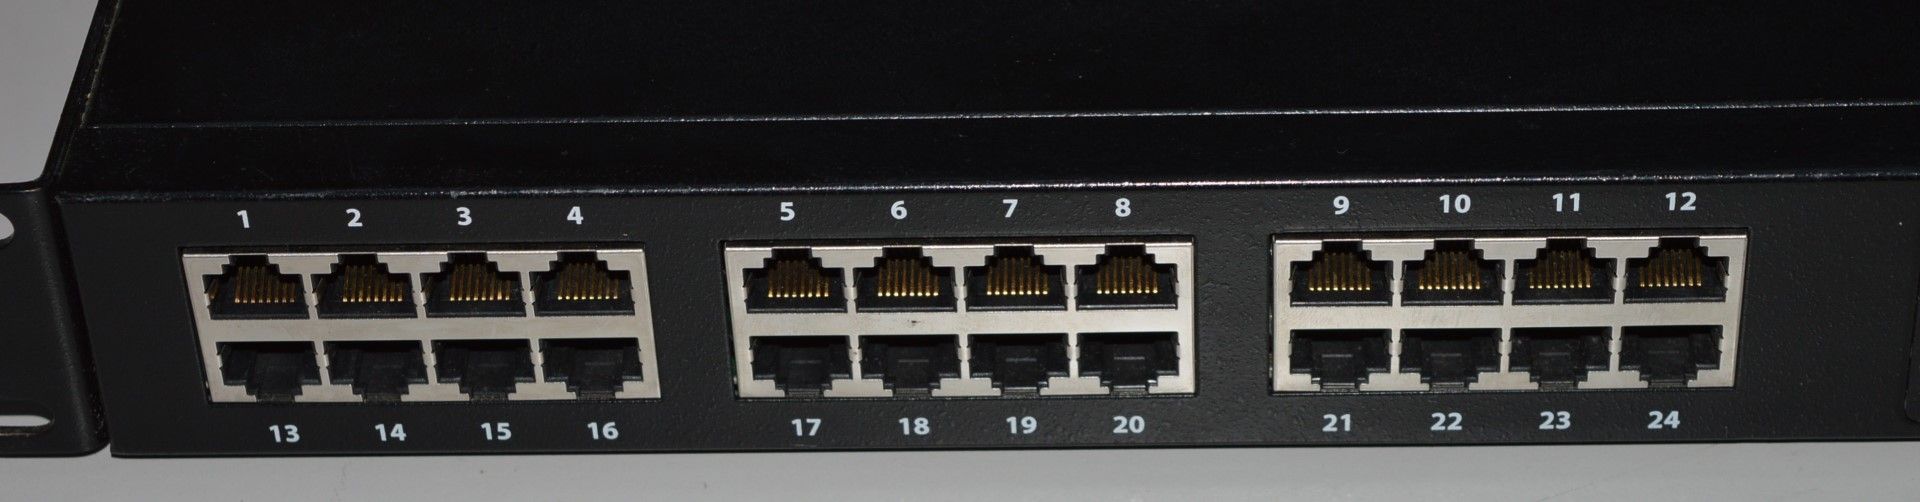 1 x USRobotics 10/100/1000 Mbps 24 Port Network Switch - CL011 - Ref JP430 - Location: Altrincham - Image 3 of 5